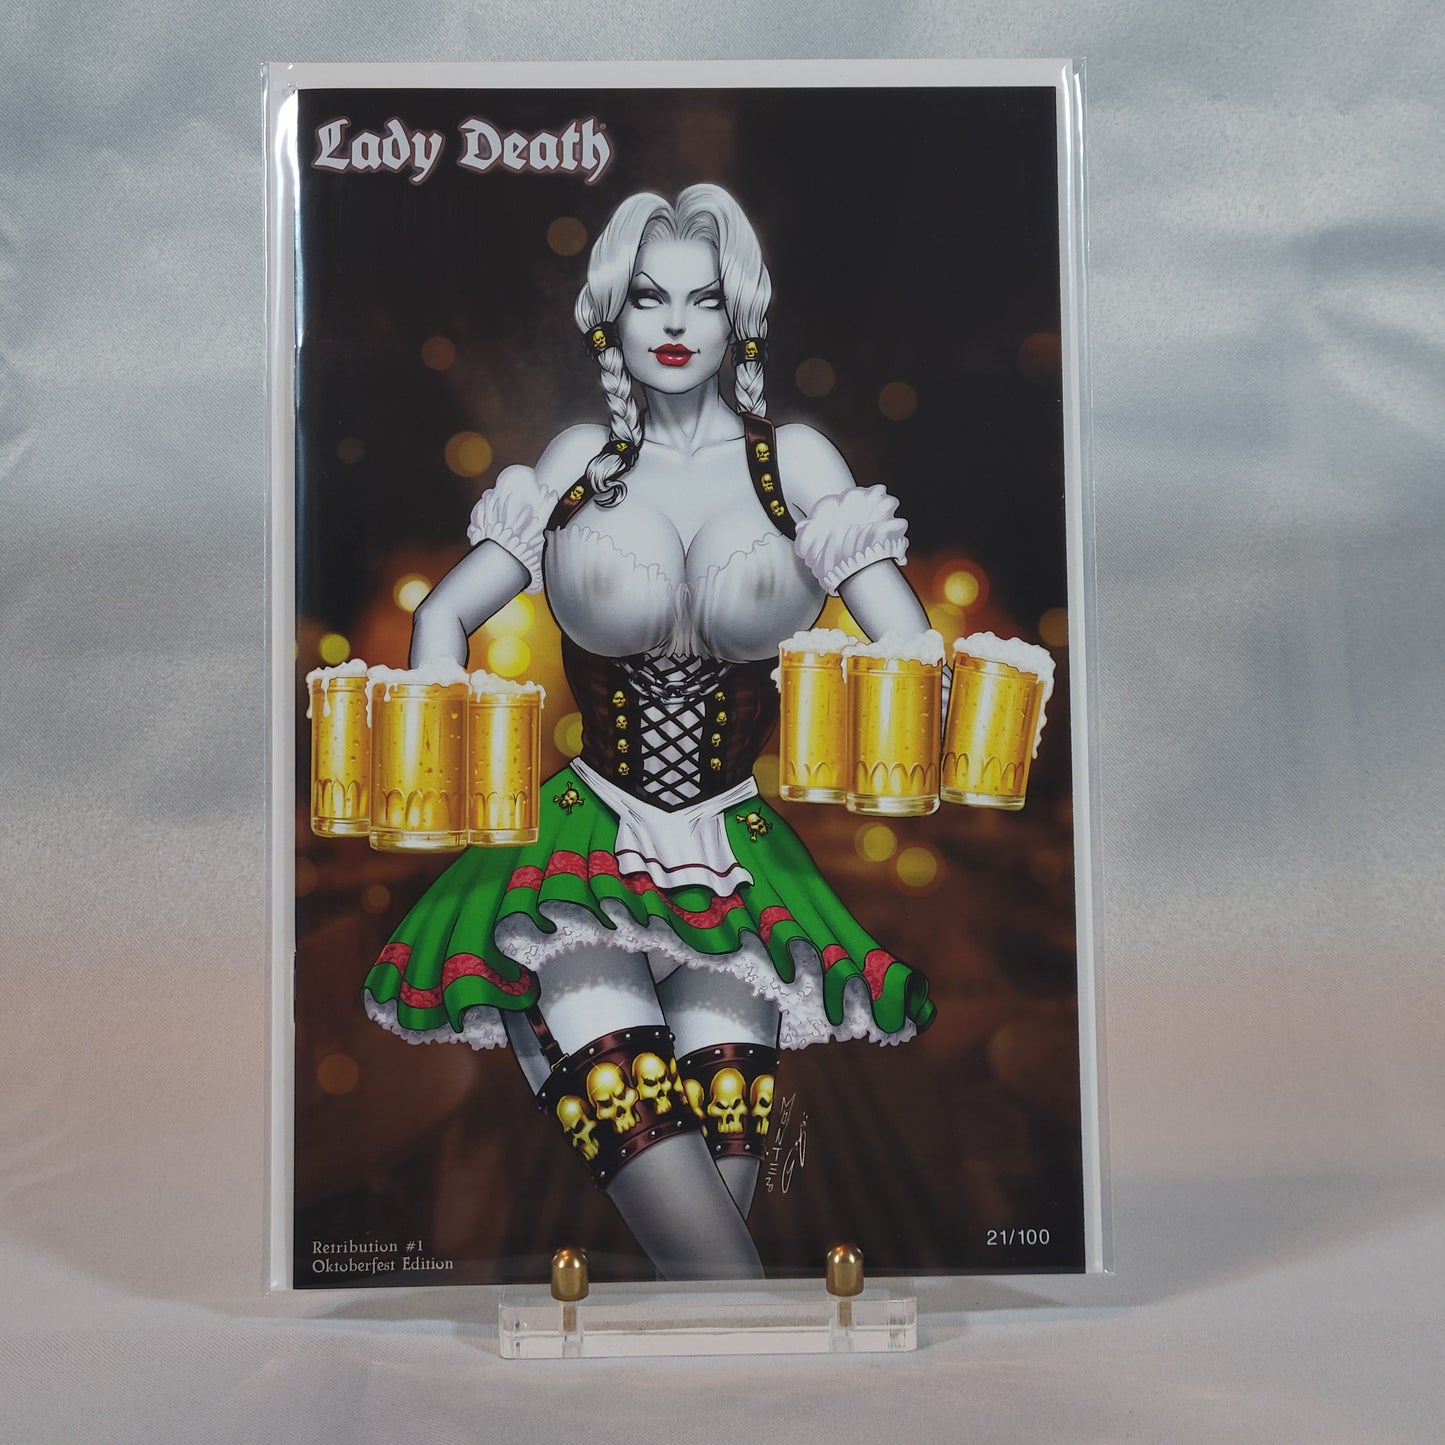 Lady Death: Retribution #1 NAUGHTY Oktoberfest Edition